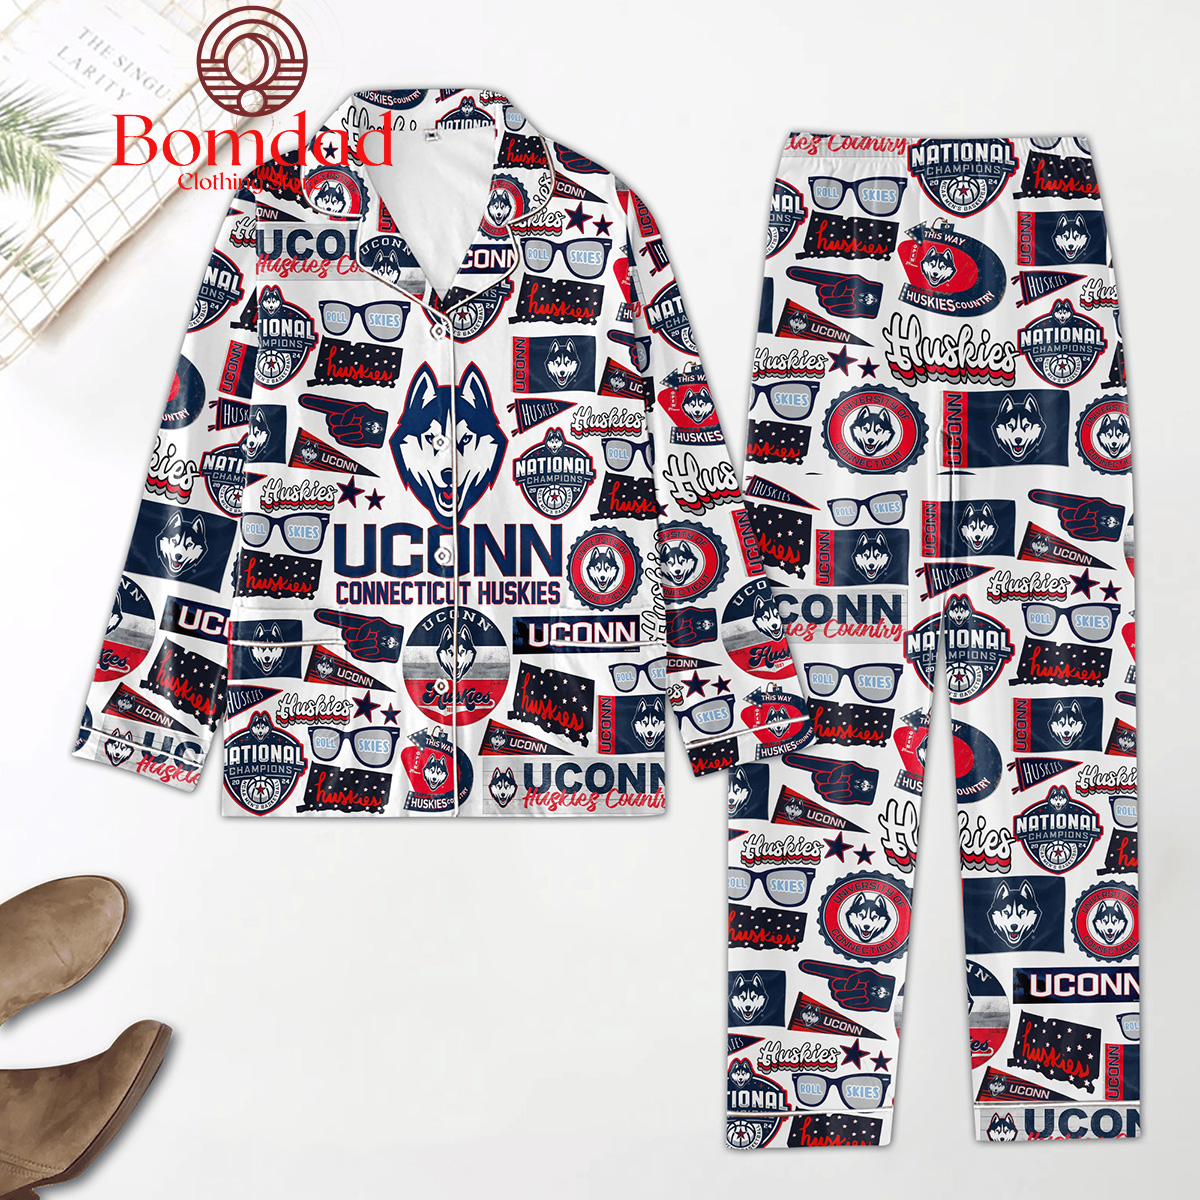 Uconn Connecticut Huskies National Champions Pajamas Set - Bomdad